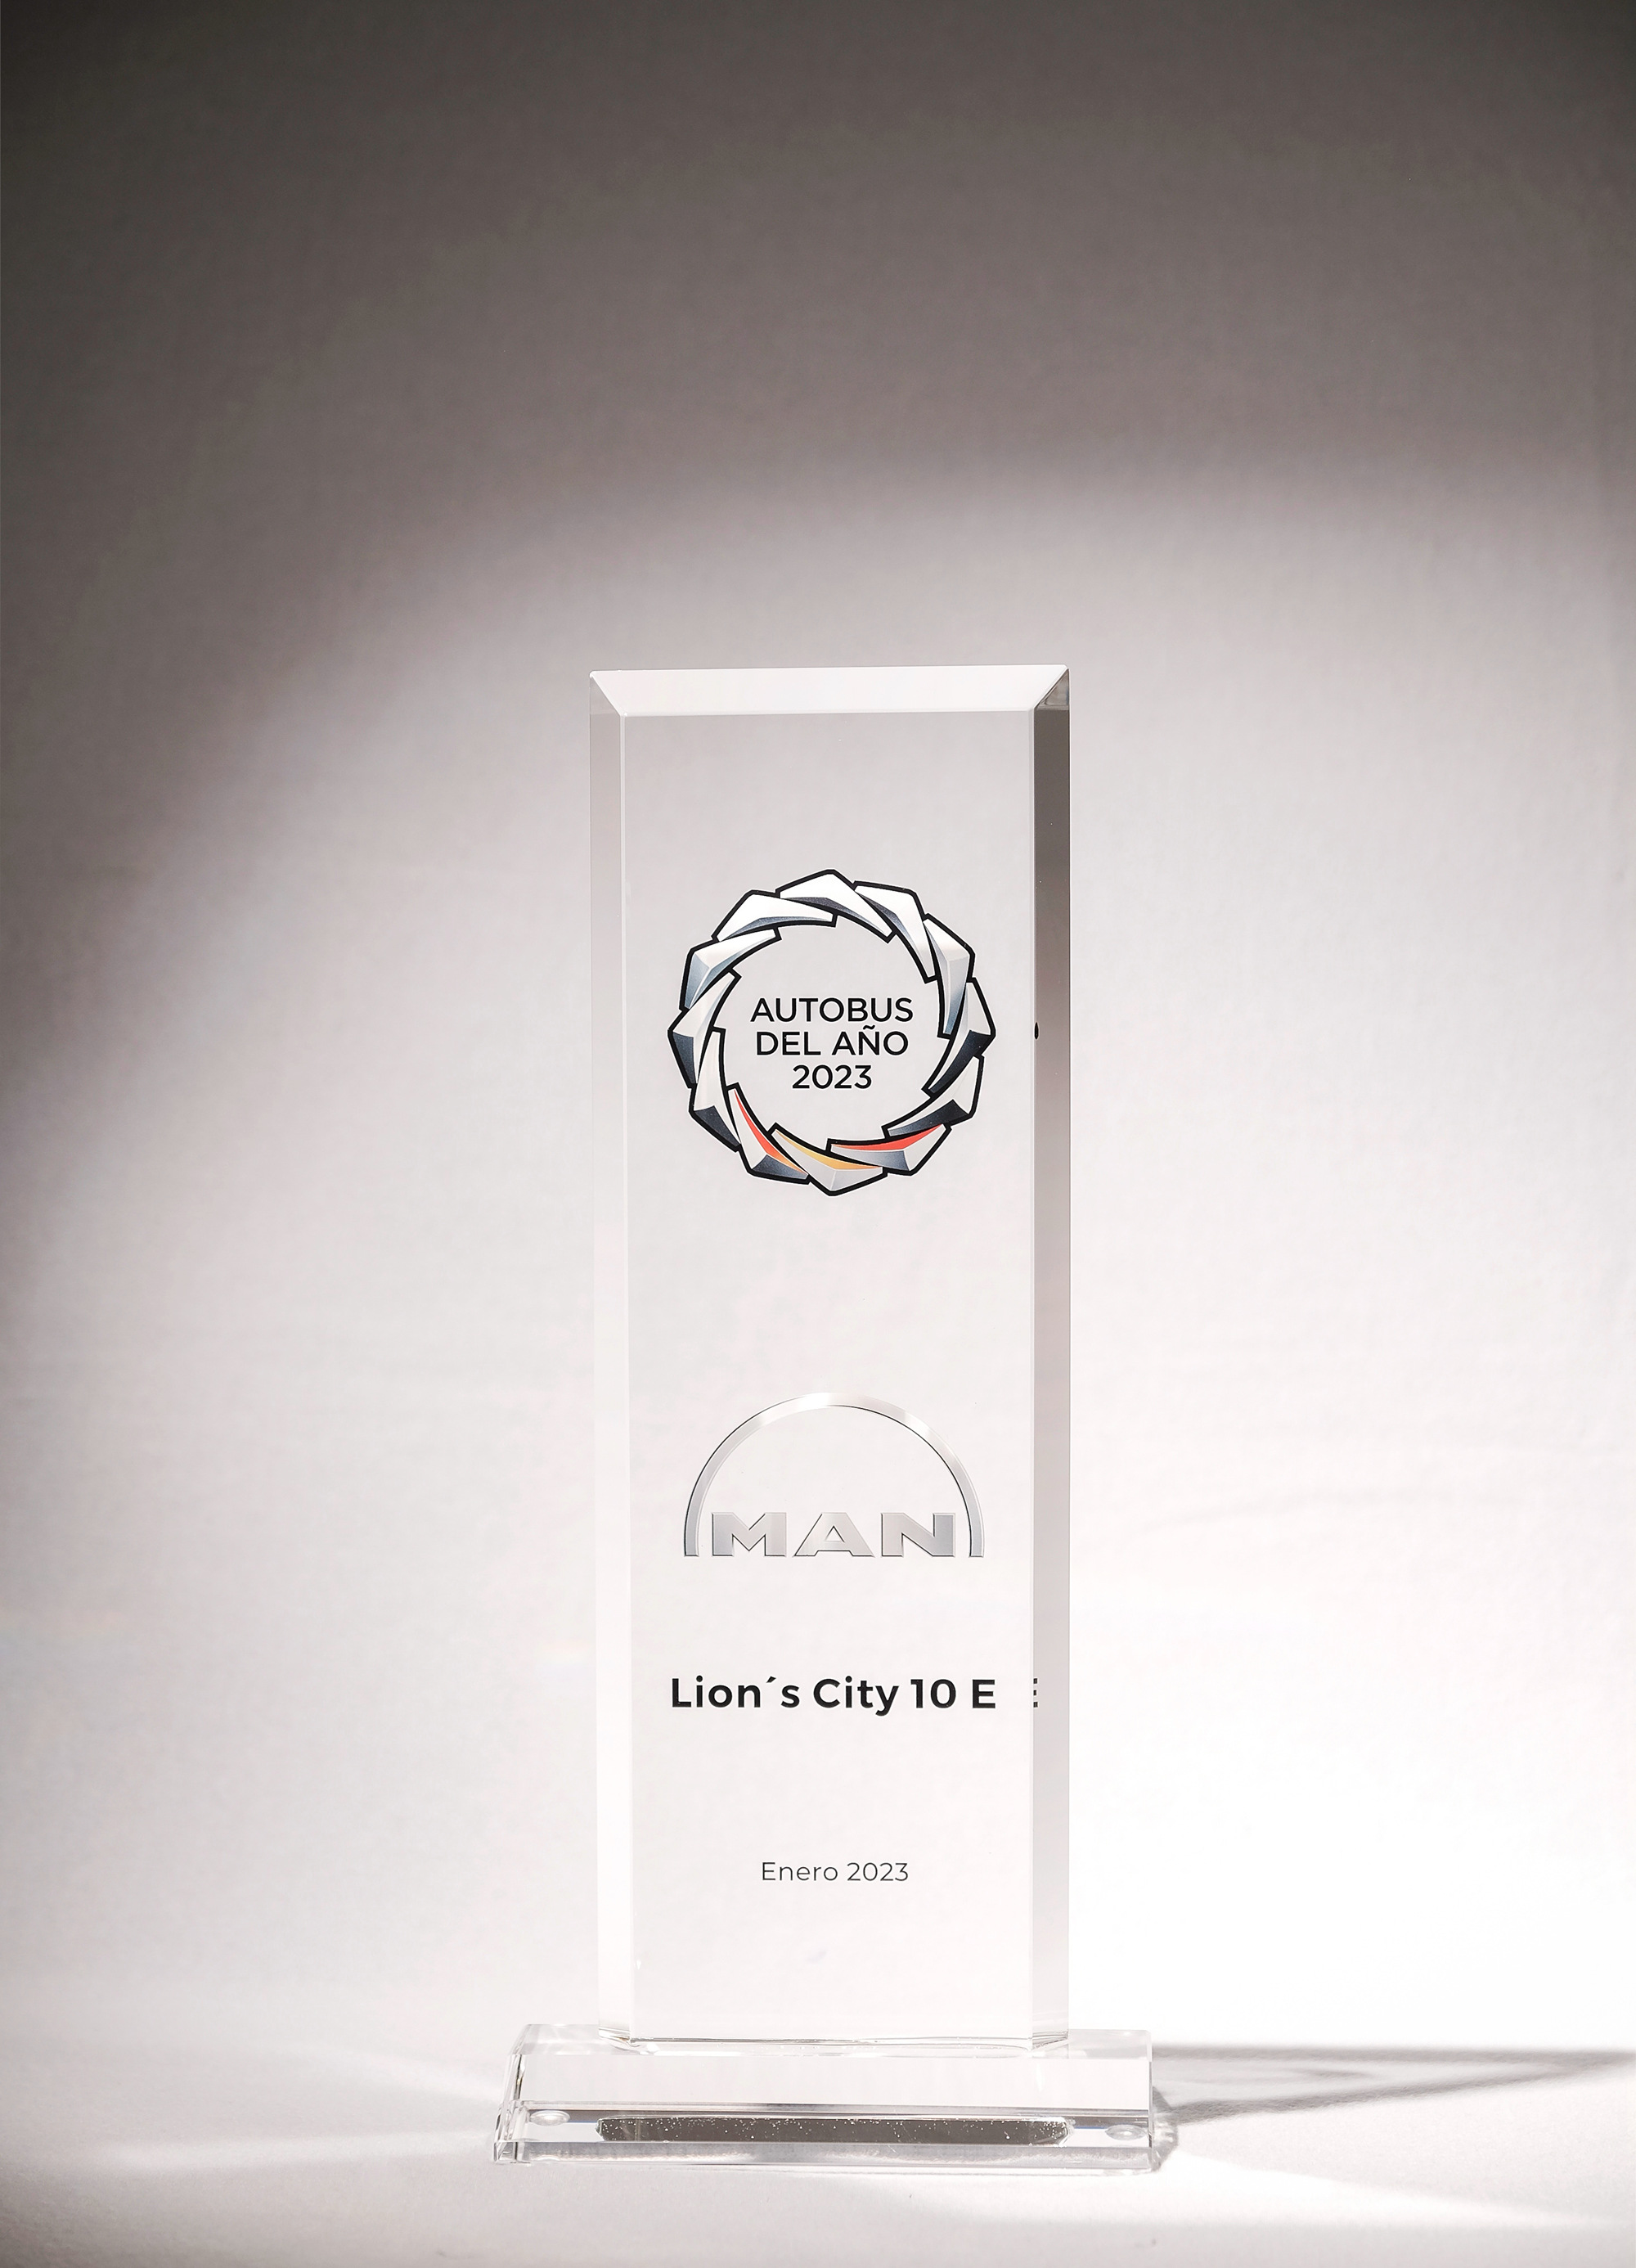 MAN Lion’s City 10 E斩获“西班牙年度最佳巴士”